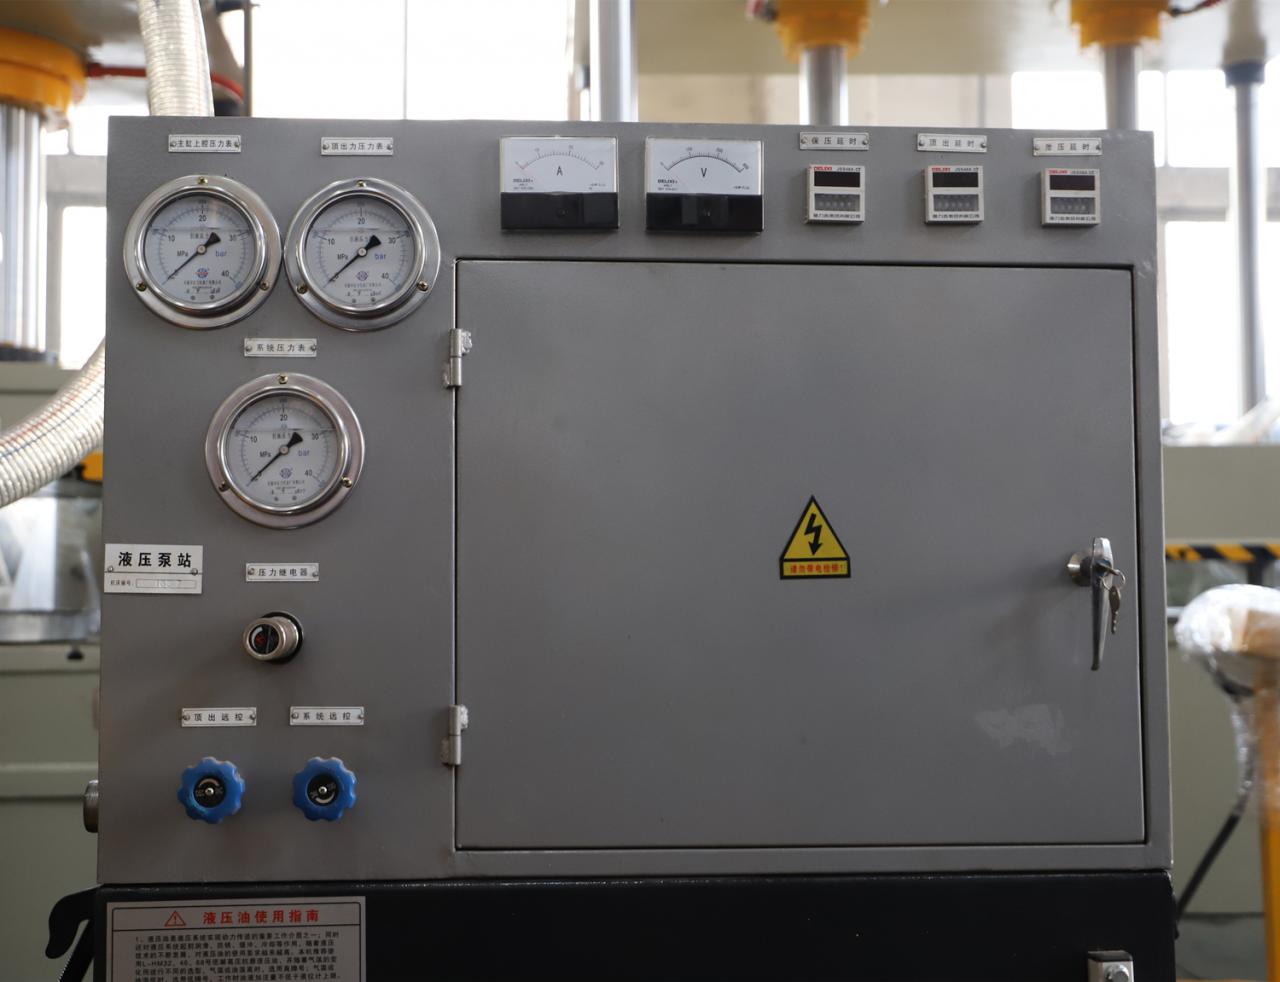 Varma Telero Hidroformanta 100 Ton Stamping Machine Hydraulic Press Machine